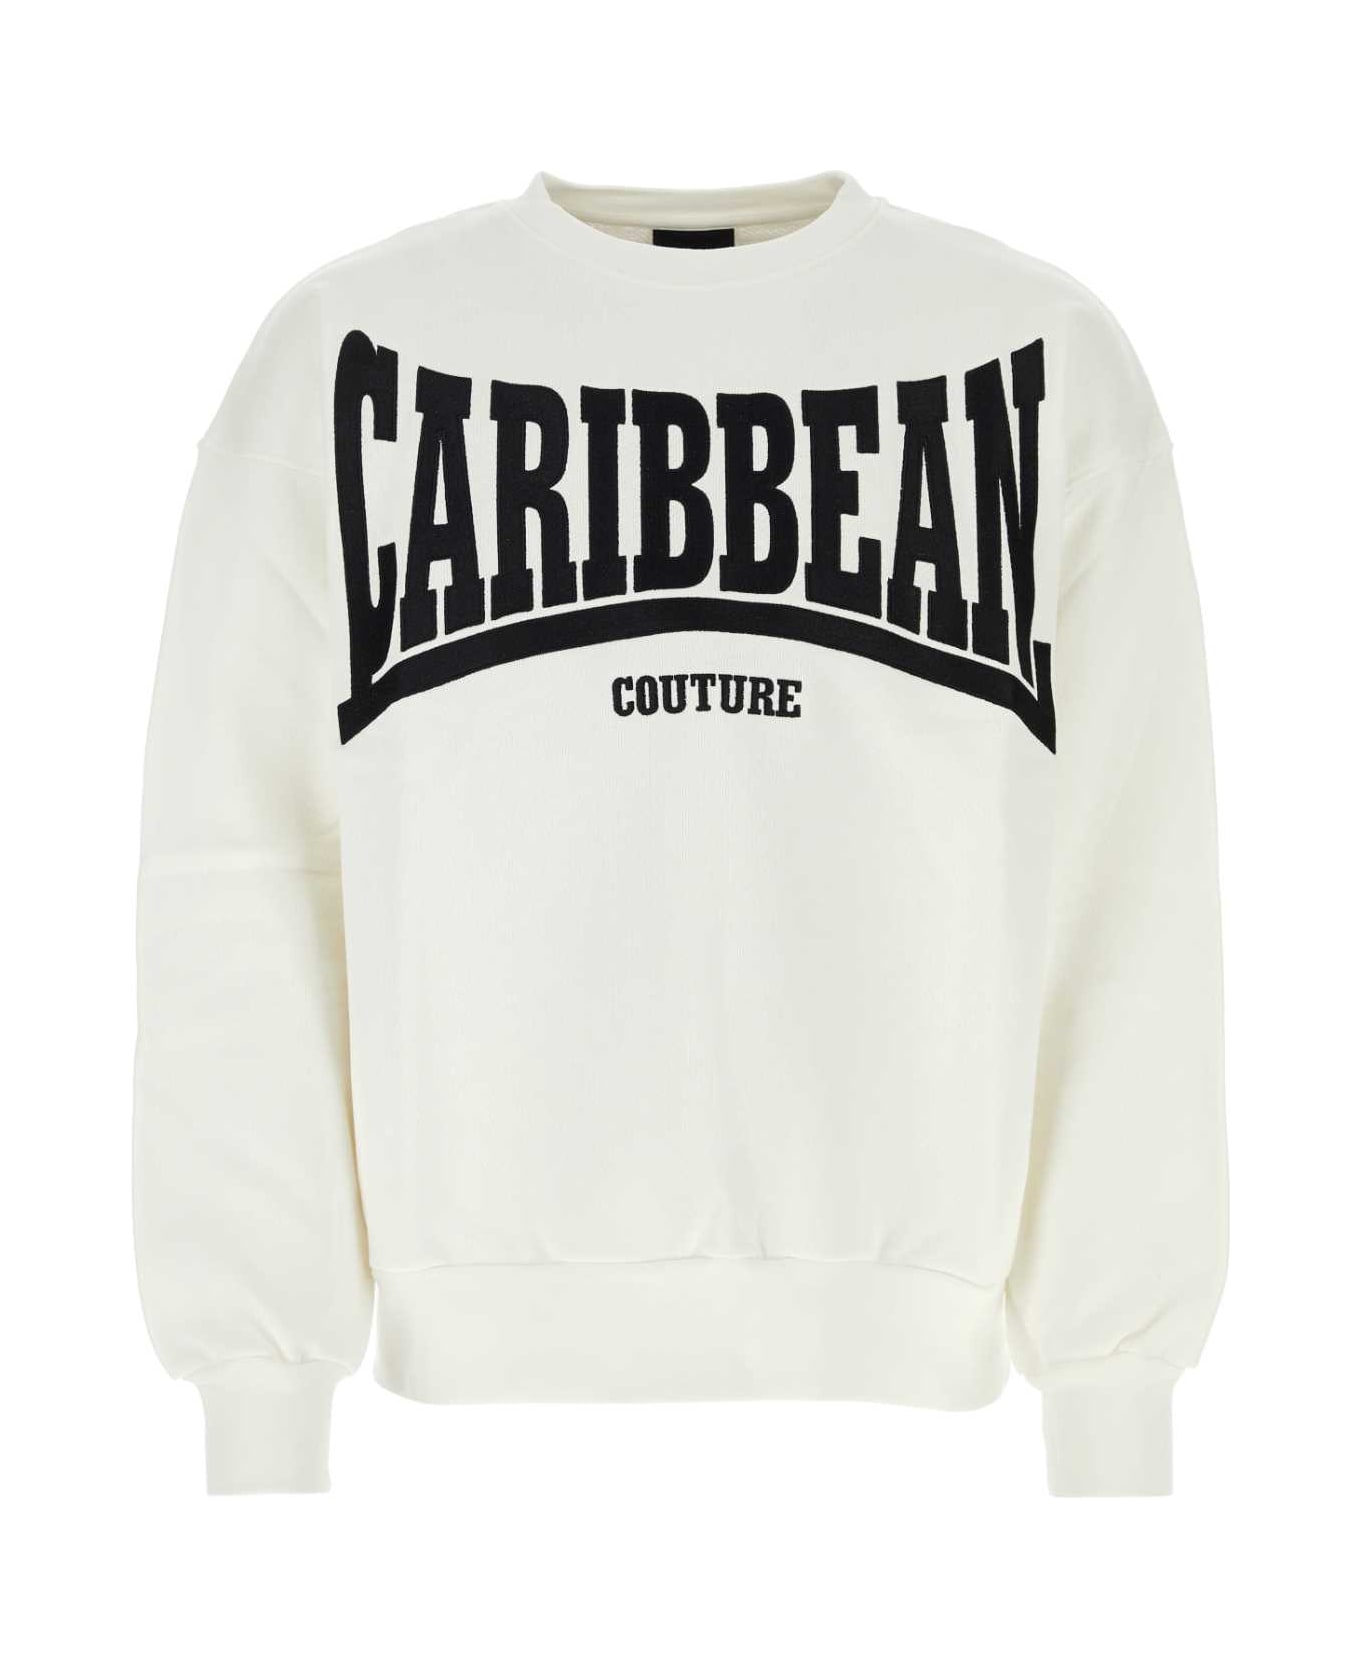 Botter White Cotton Sweatshirt - WHITE CARIBBEAN COUTURE EMBR フリース